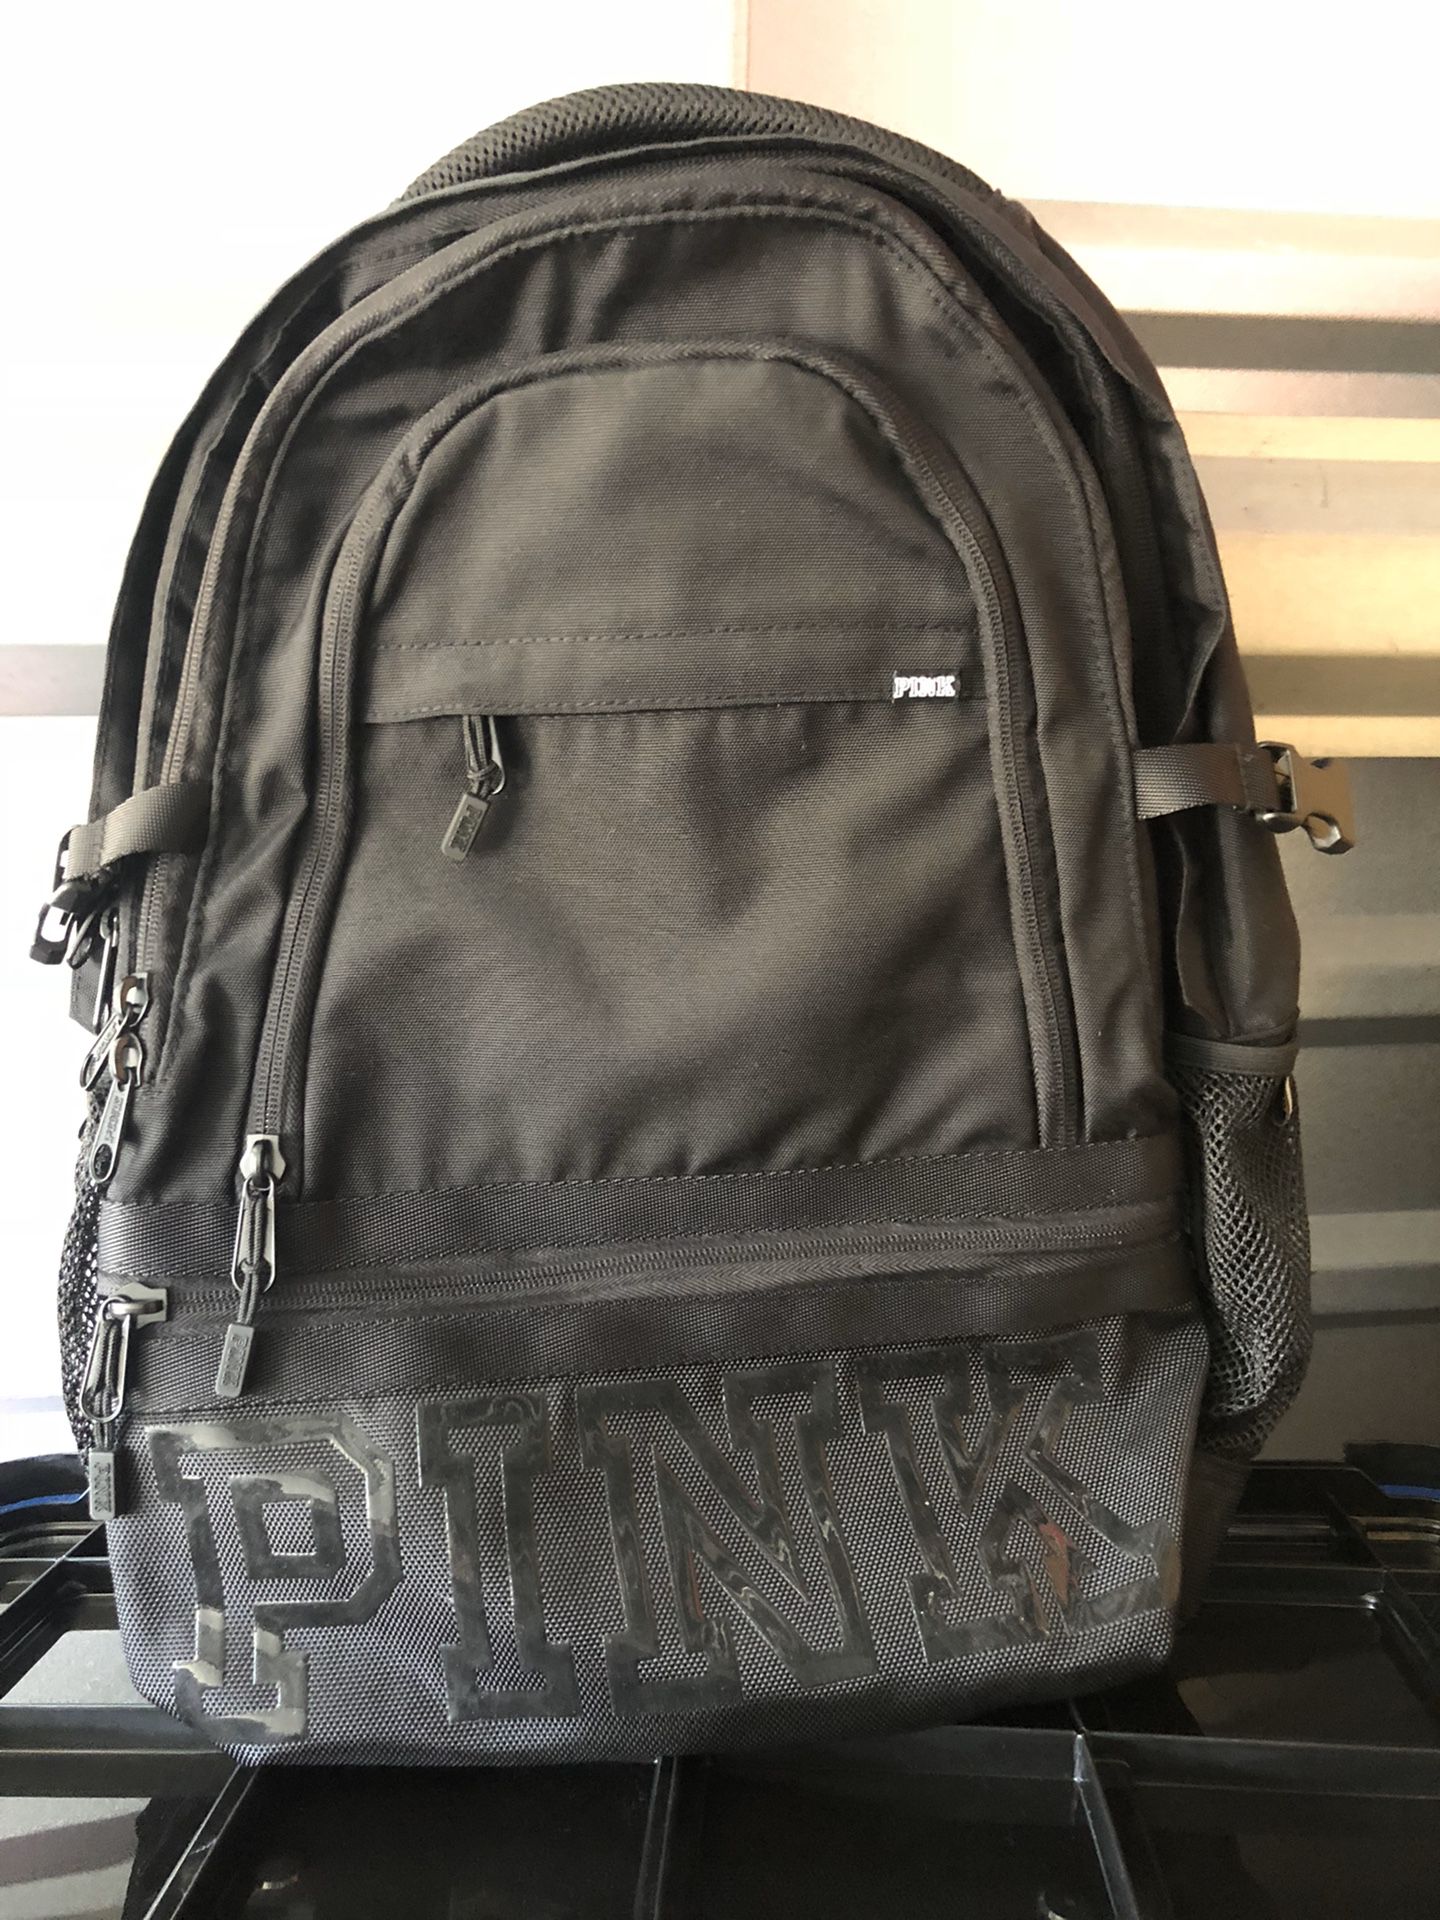 PINK backpack